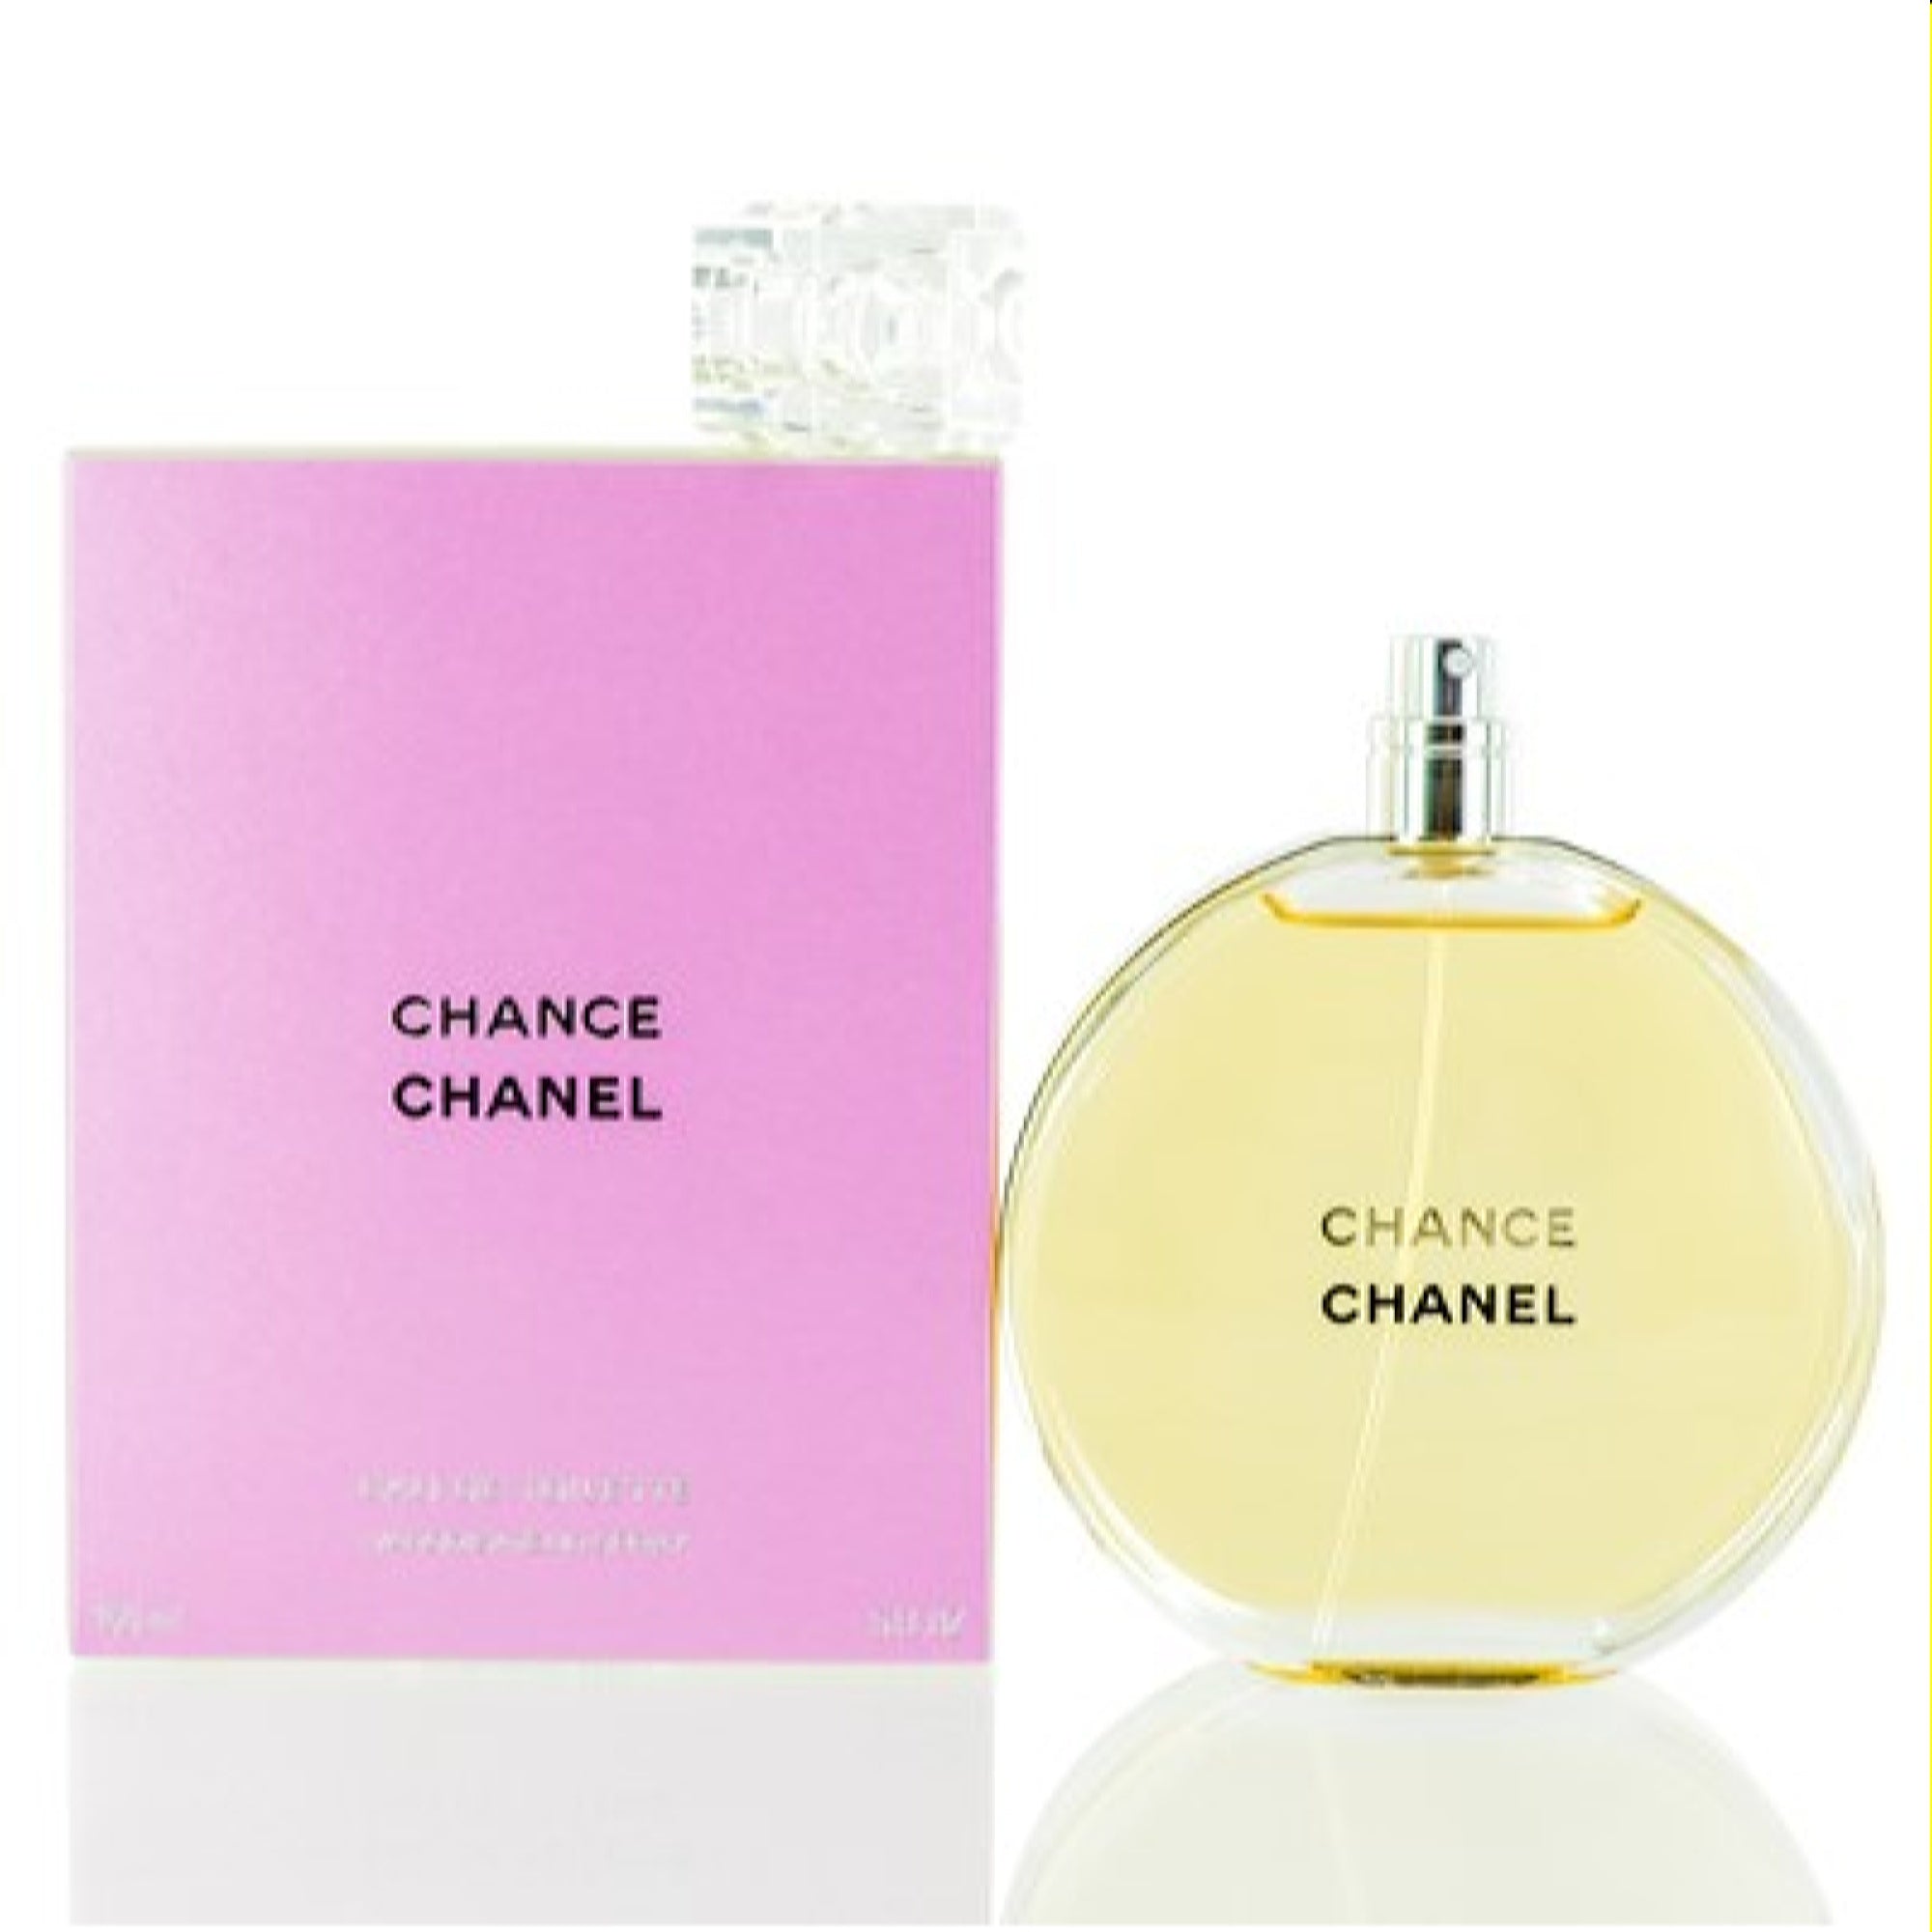 Chanel Women's Chance Chanel Edt Spray 5.0 Oz (150 Ml)   3145891264906